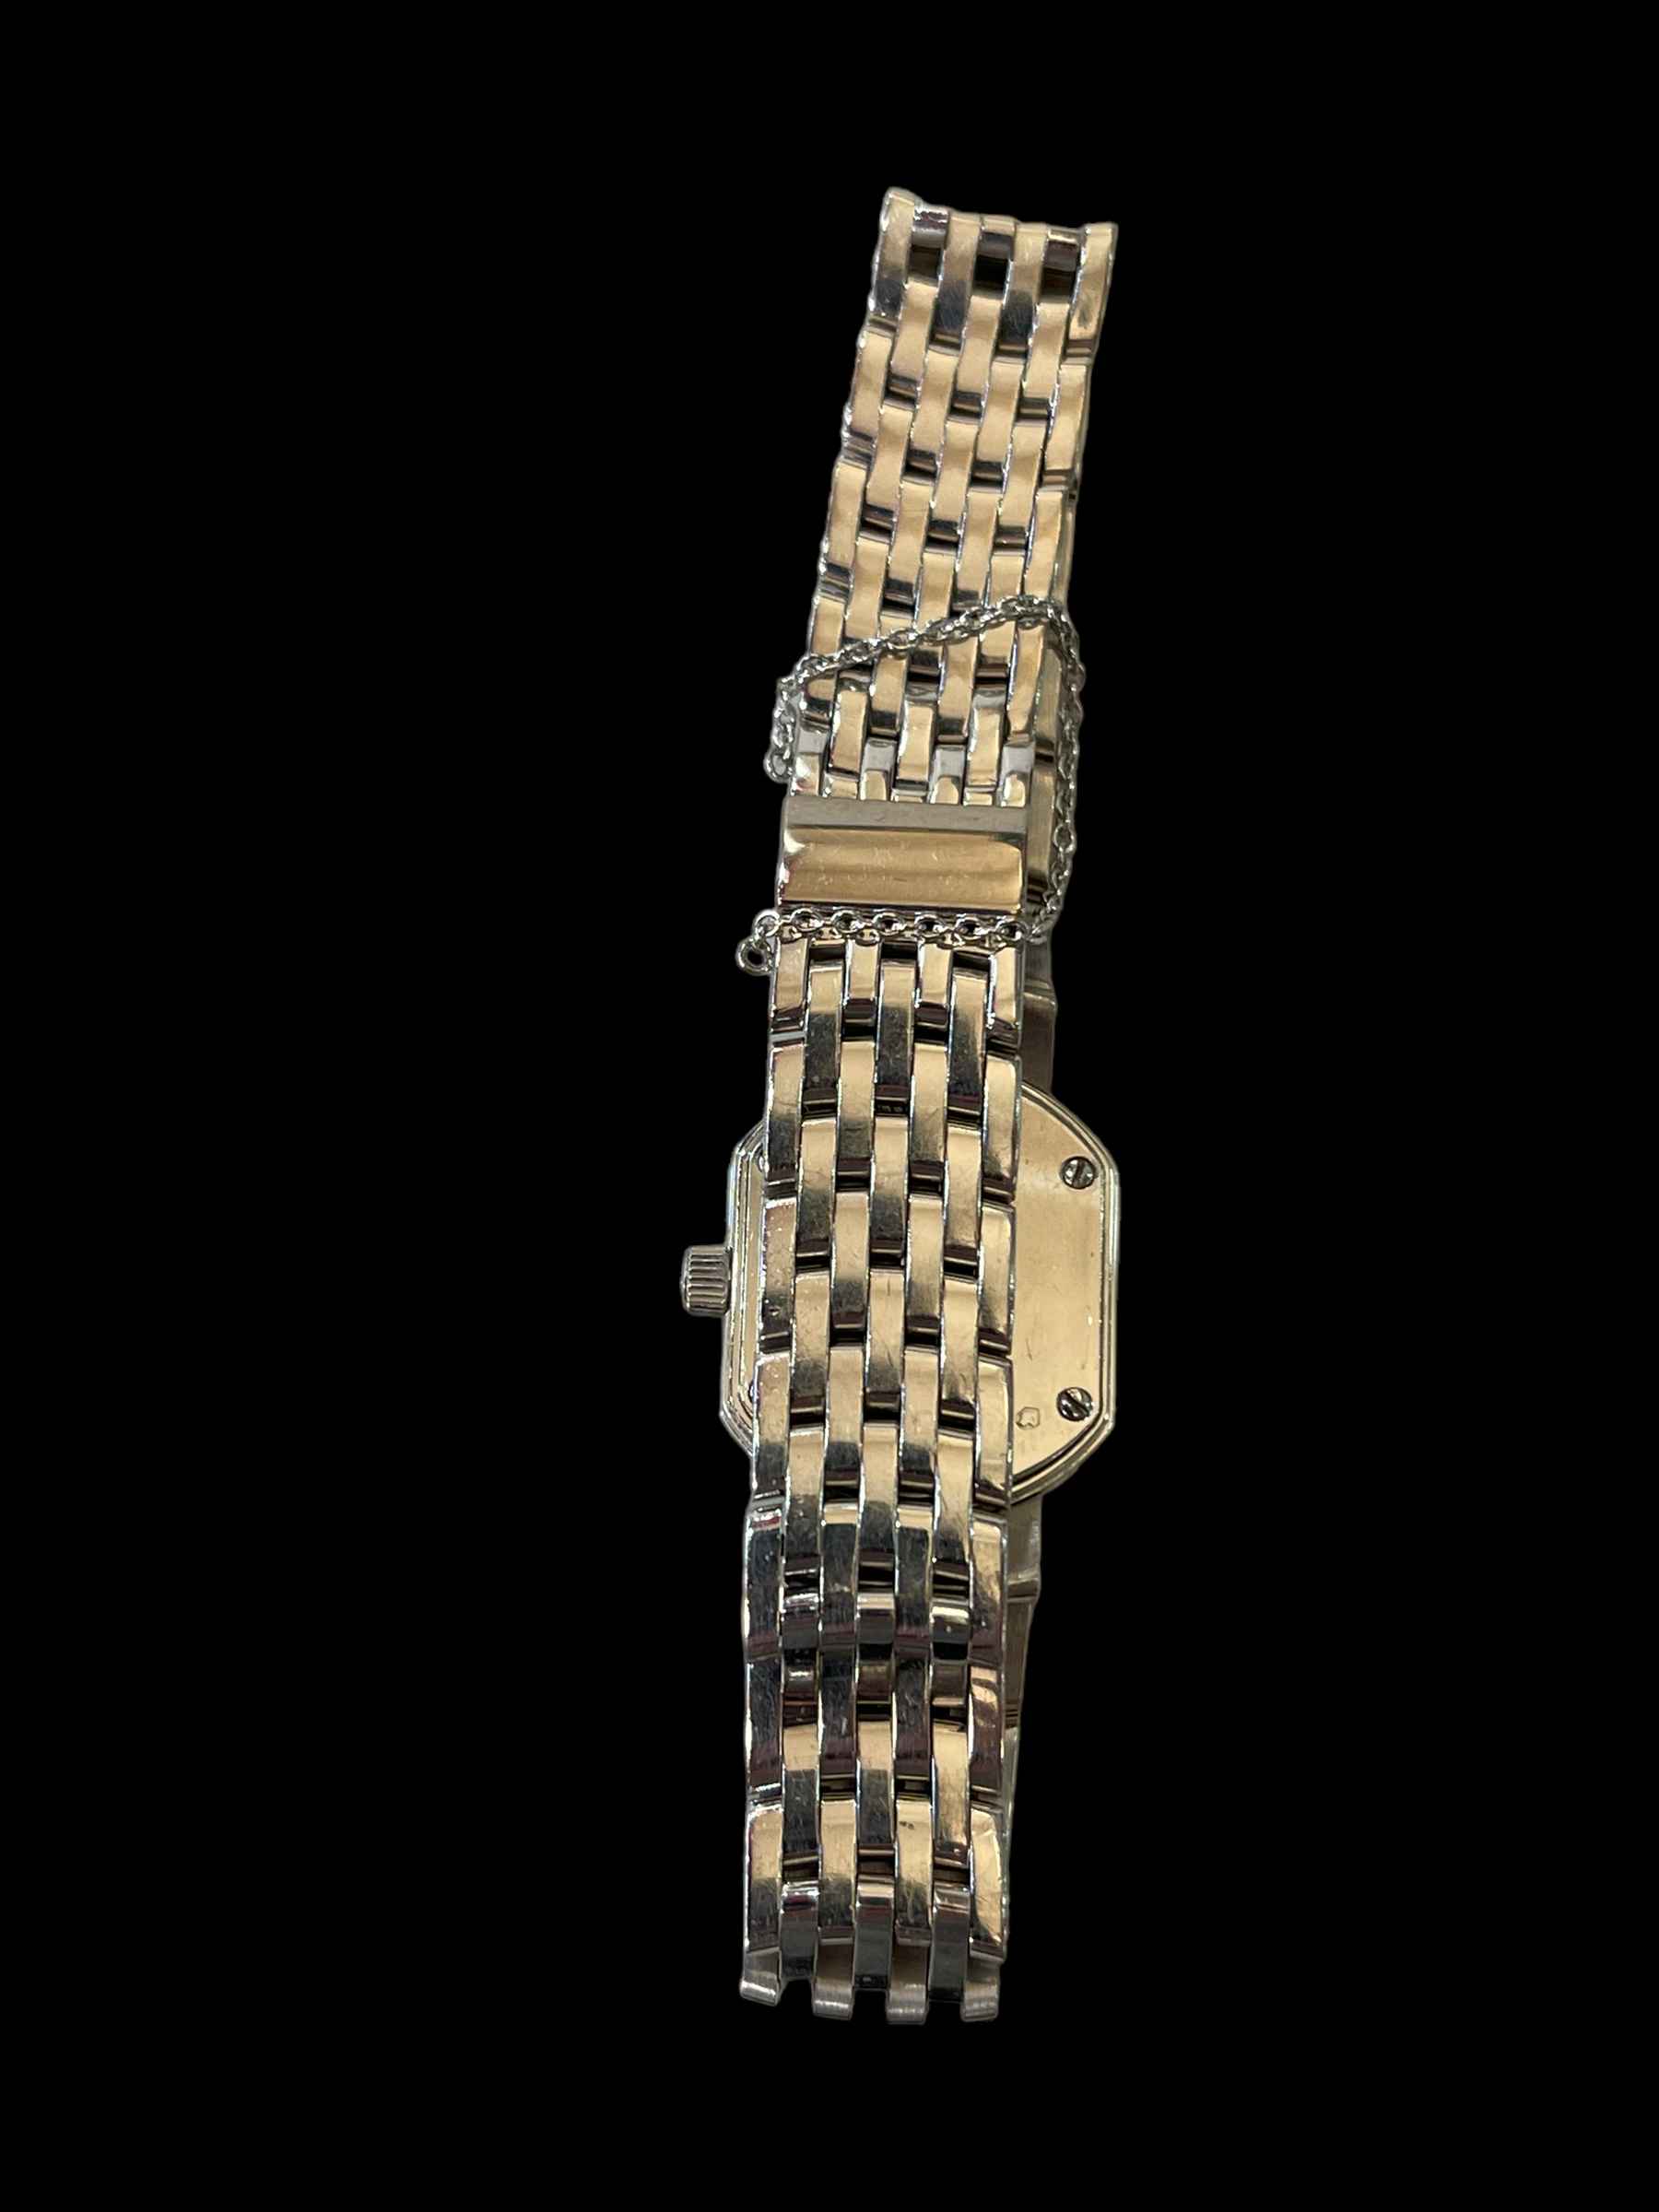 Tiffany diamond set 18 carat white gold bracelet watch, with outer box. - Image 3 of 3